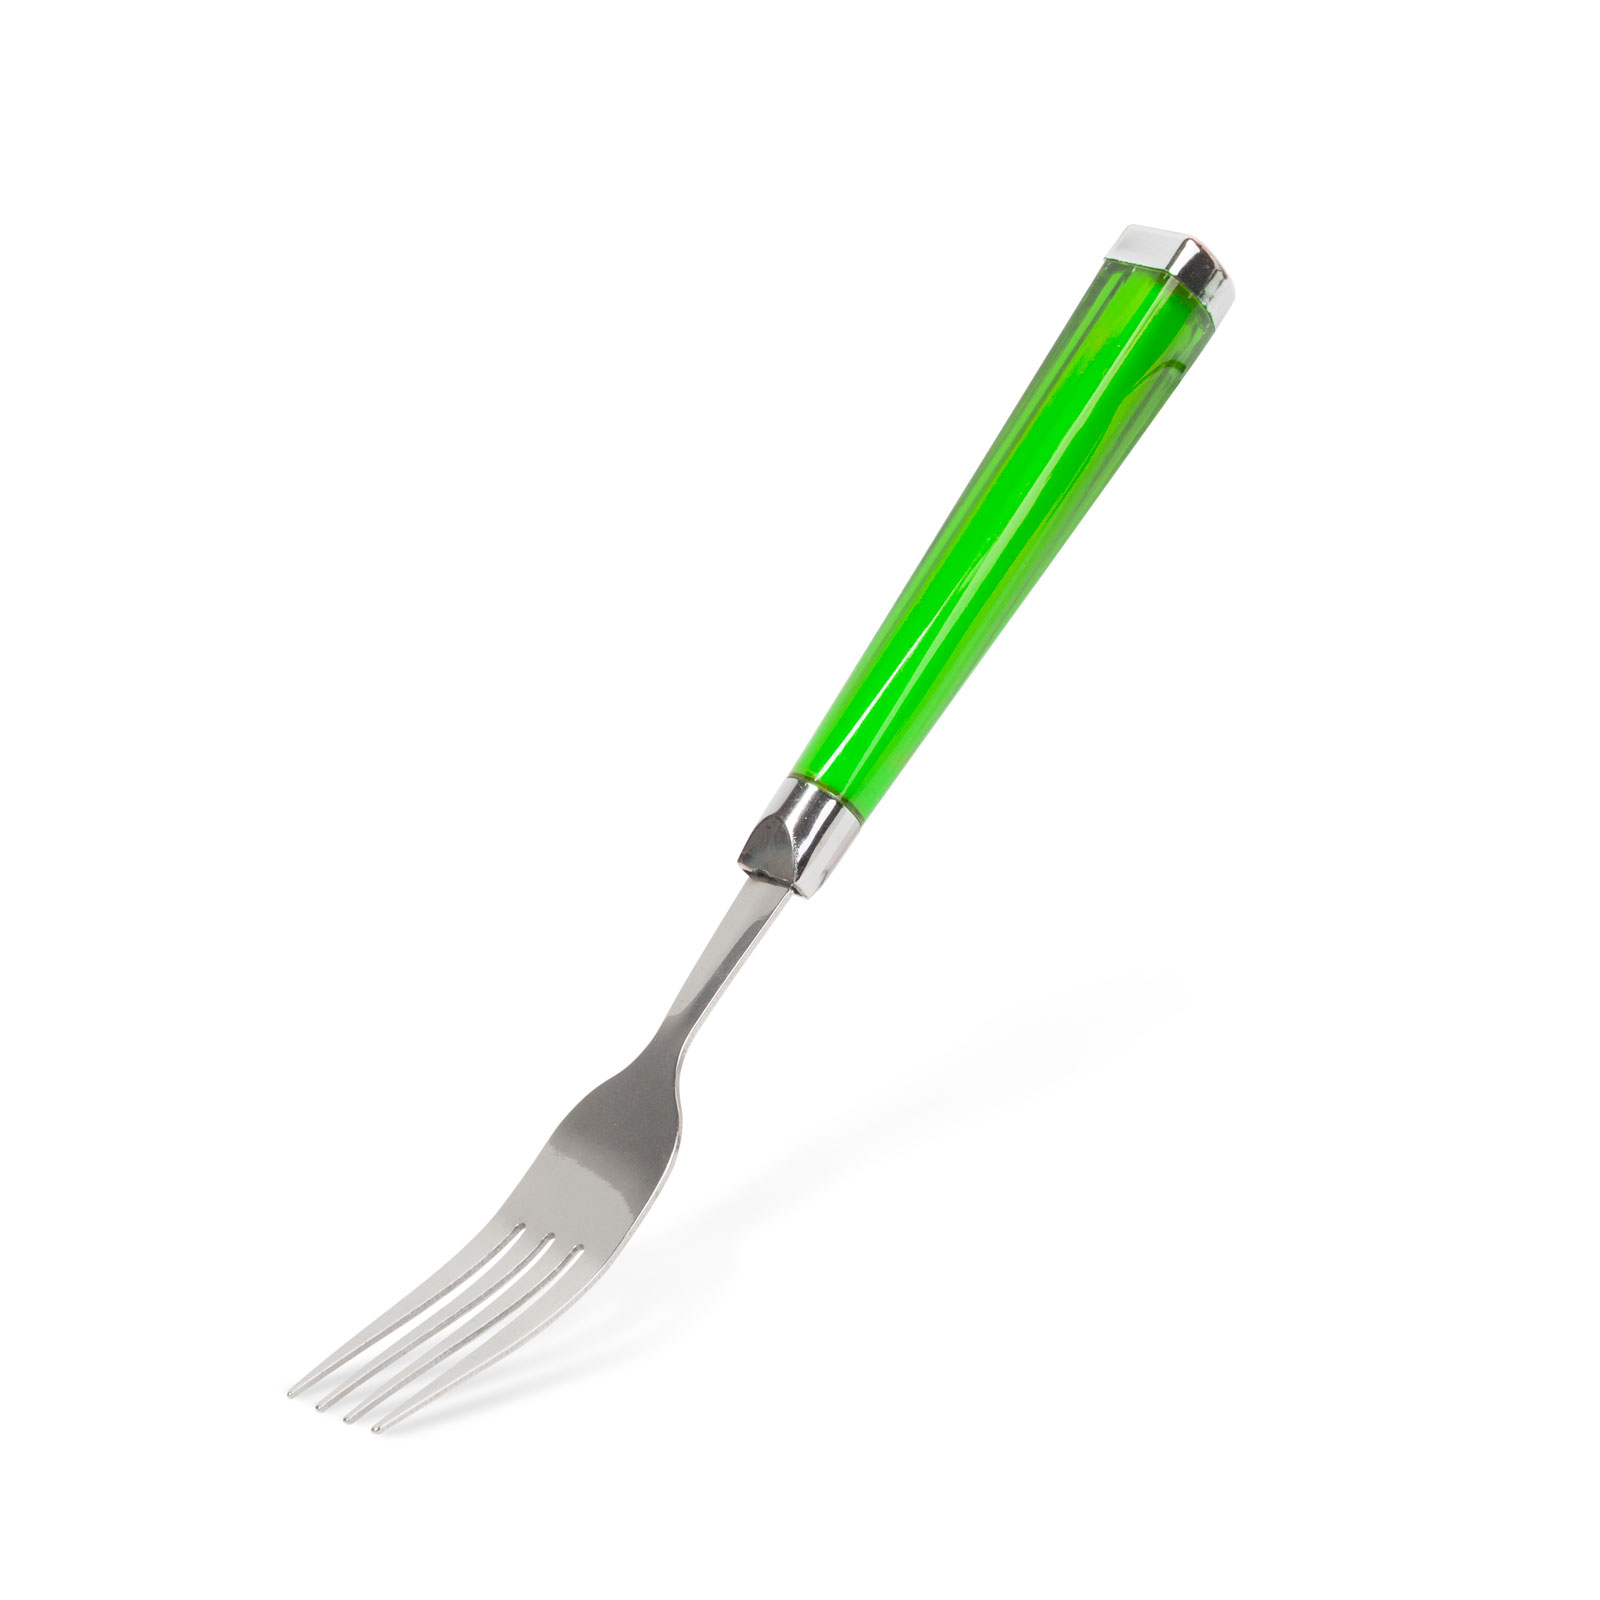 Cutlery set - green - 4 pcs - with plastic handle thumb